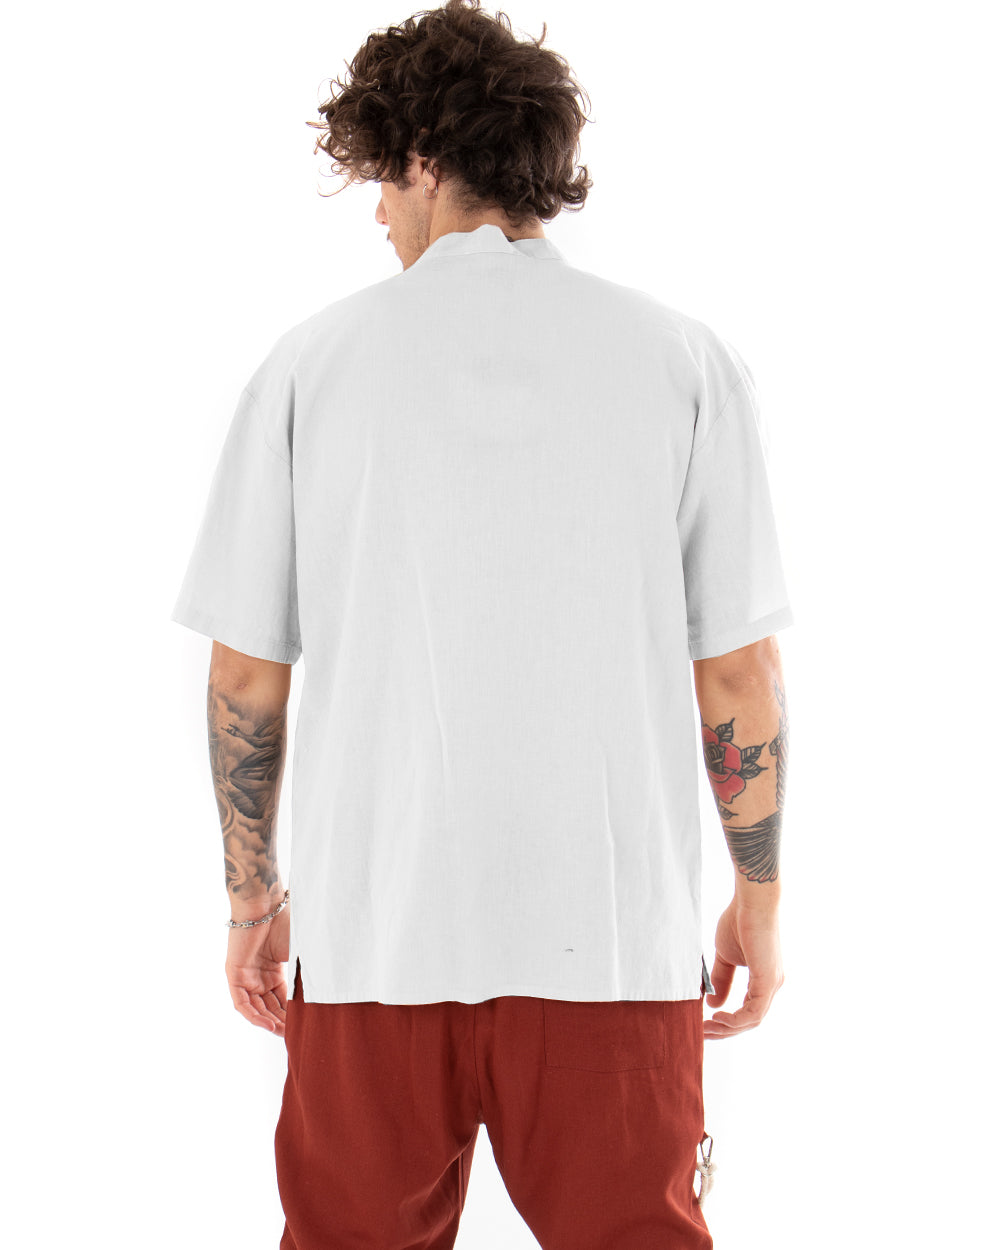 Men's Shirt Short Sleeve Solid Color White Korean Collar Casual GIOSAL-CC1125A